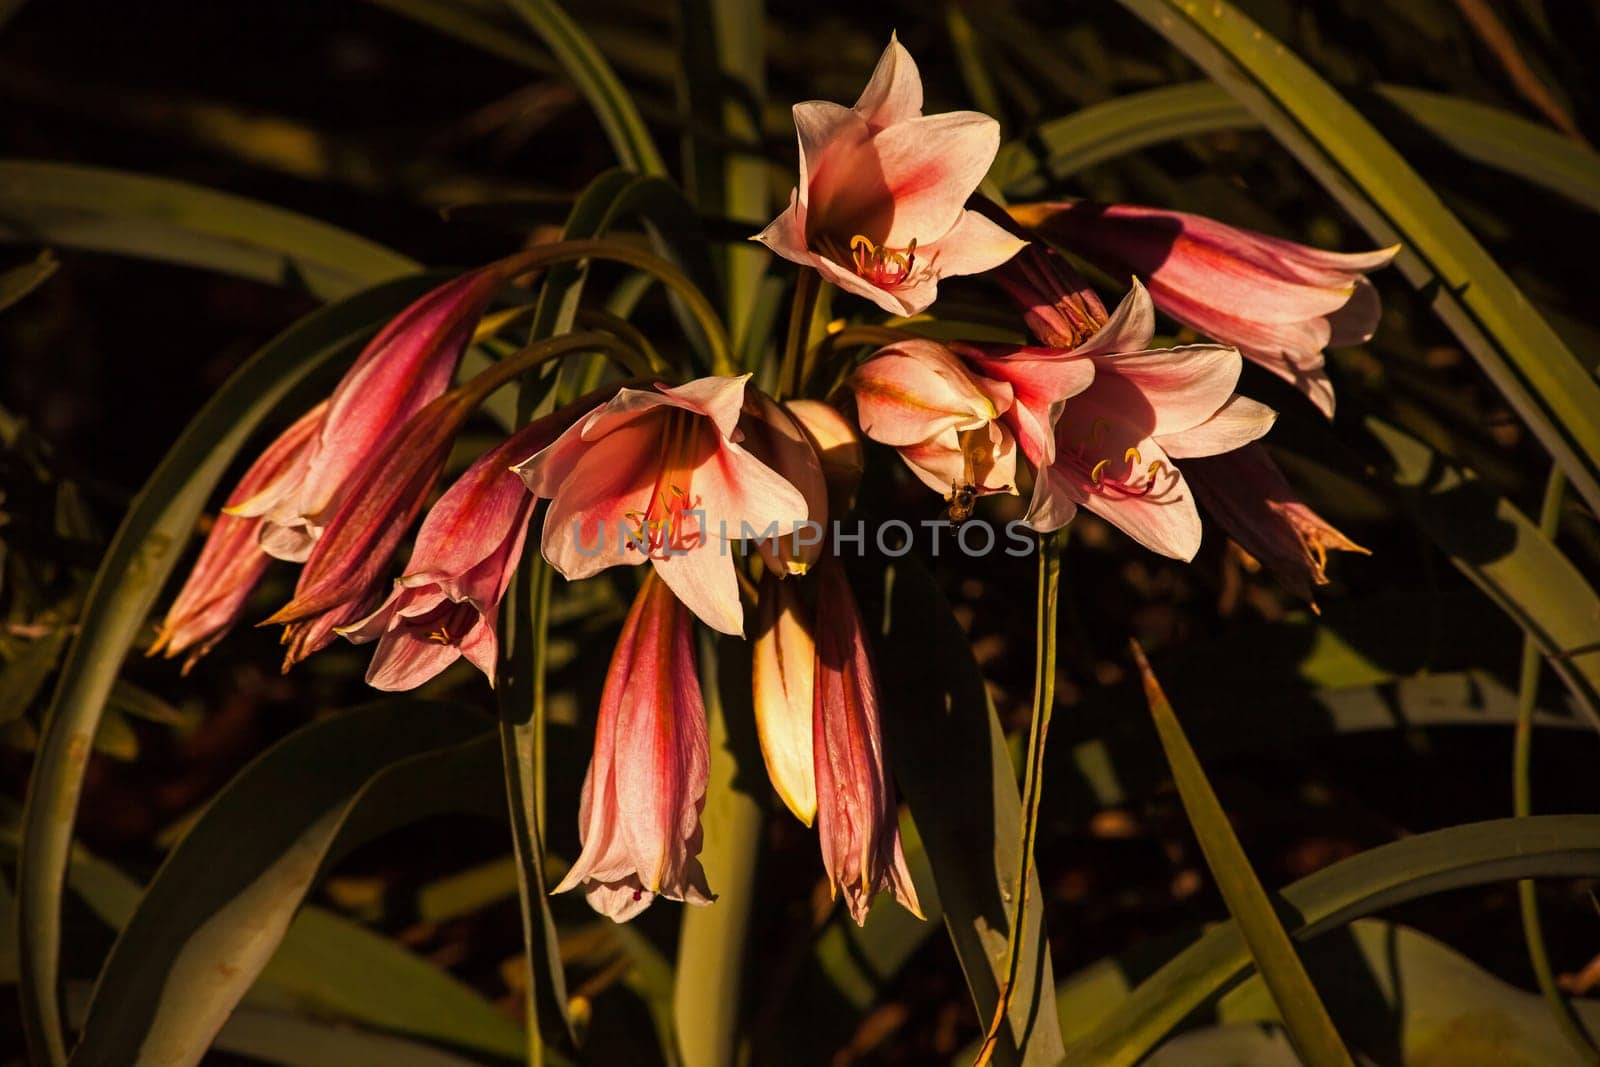 Orange River lily (Crinum bulbispermum) 16091 by kobus_peche